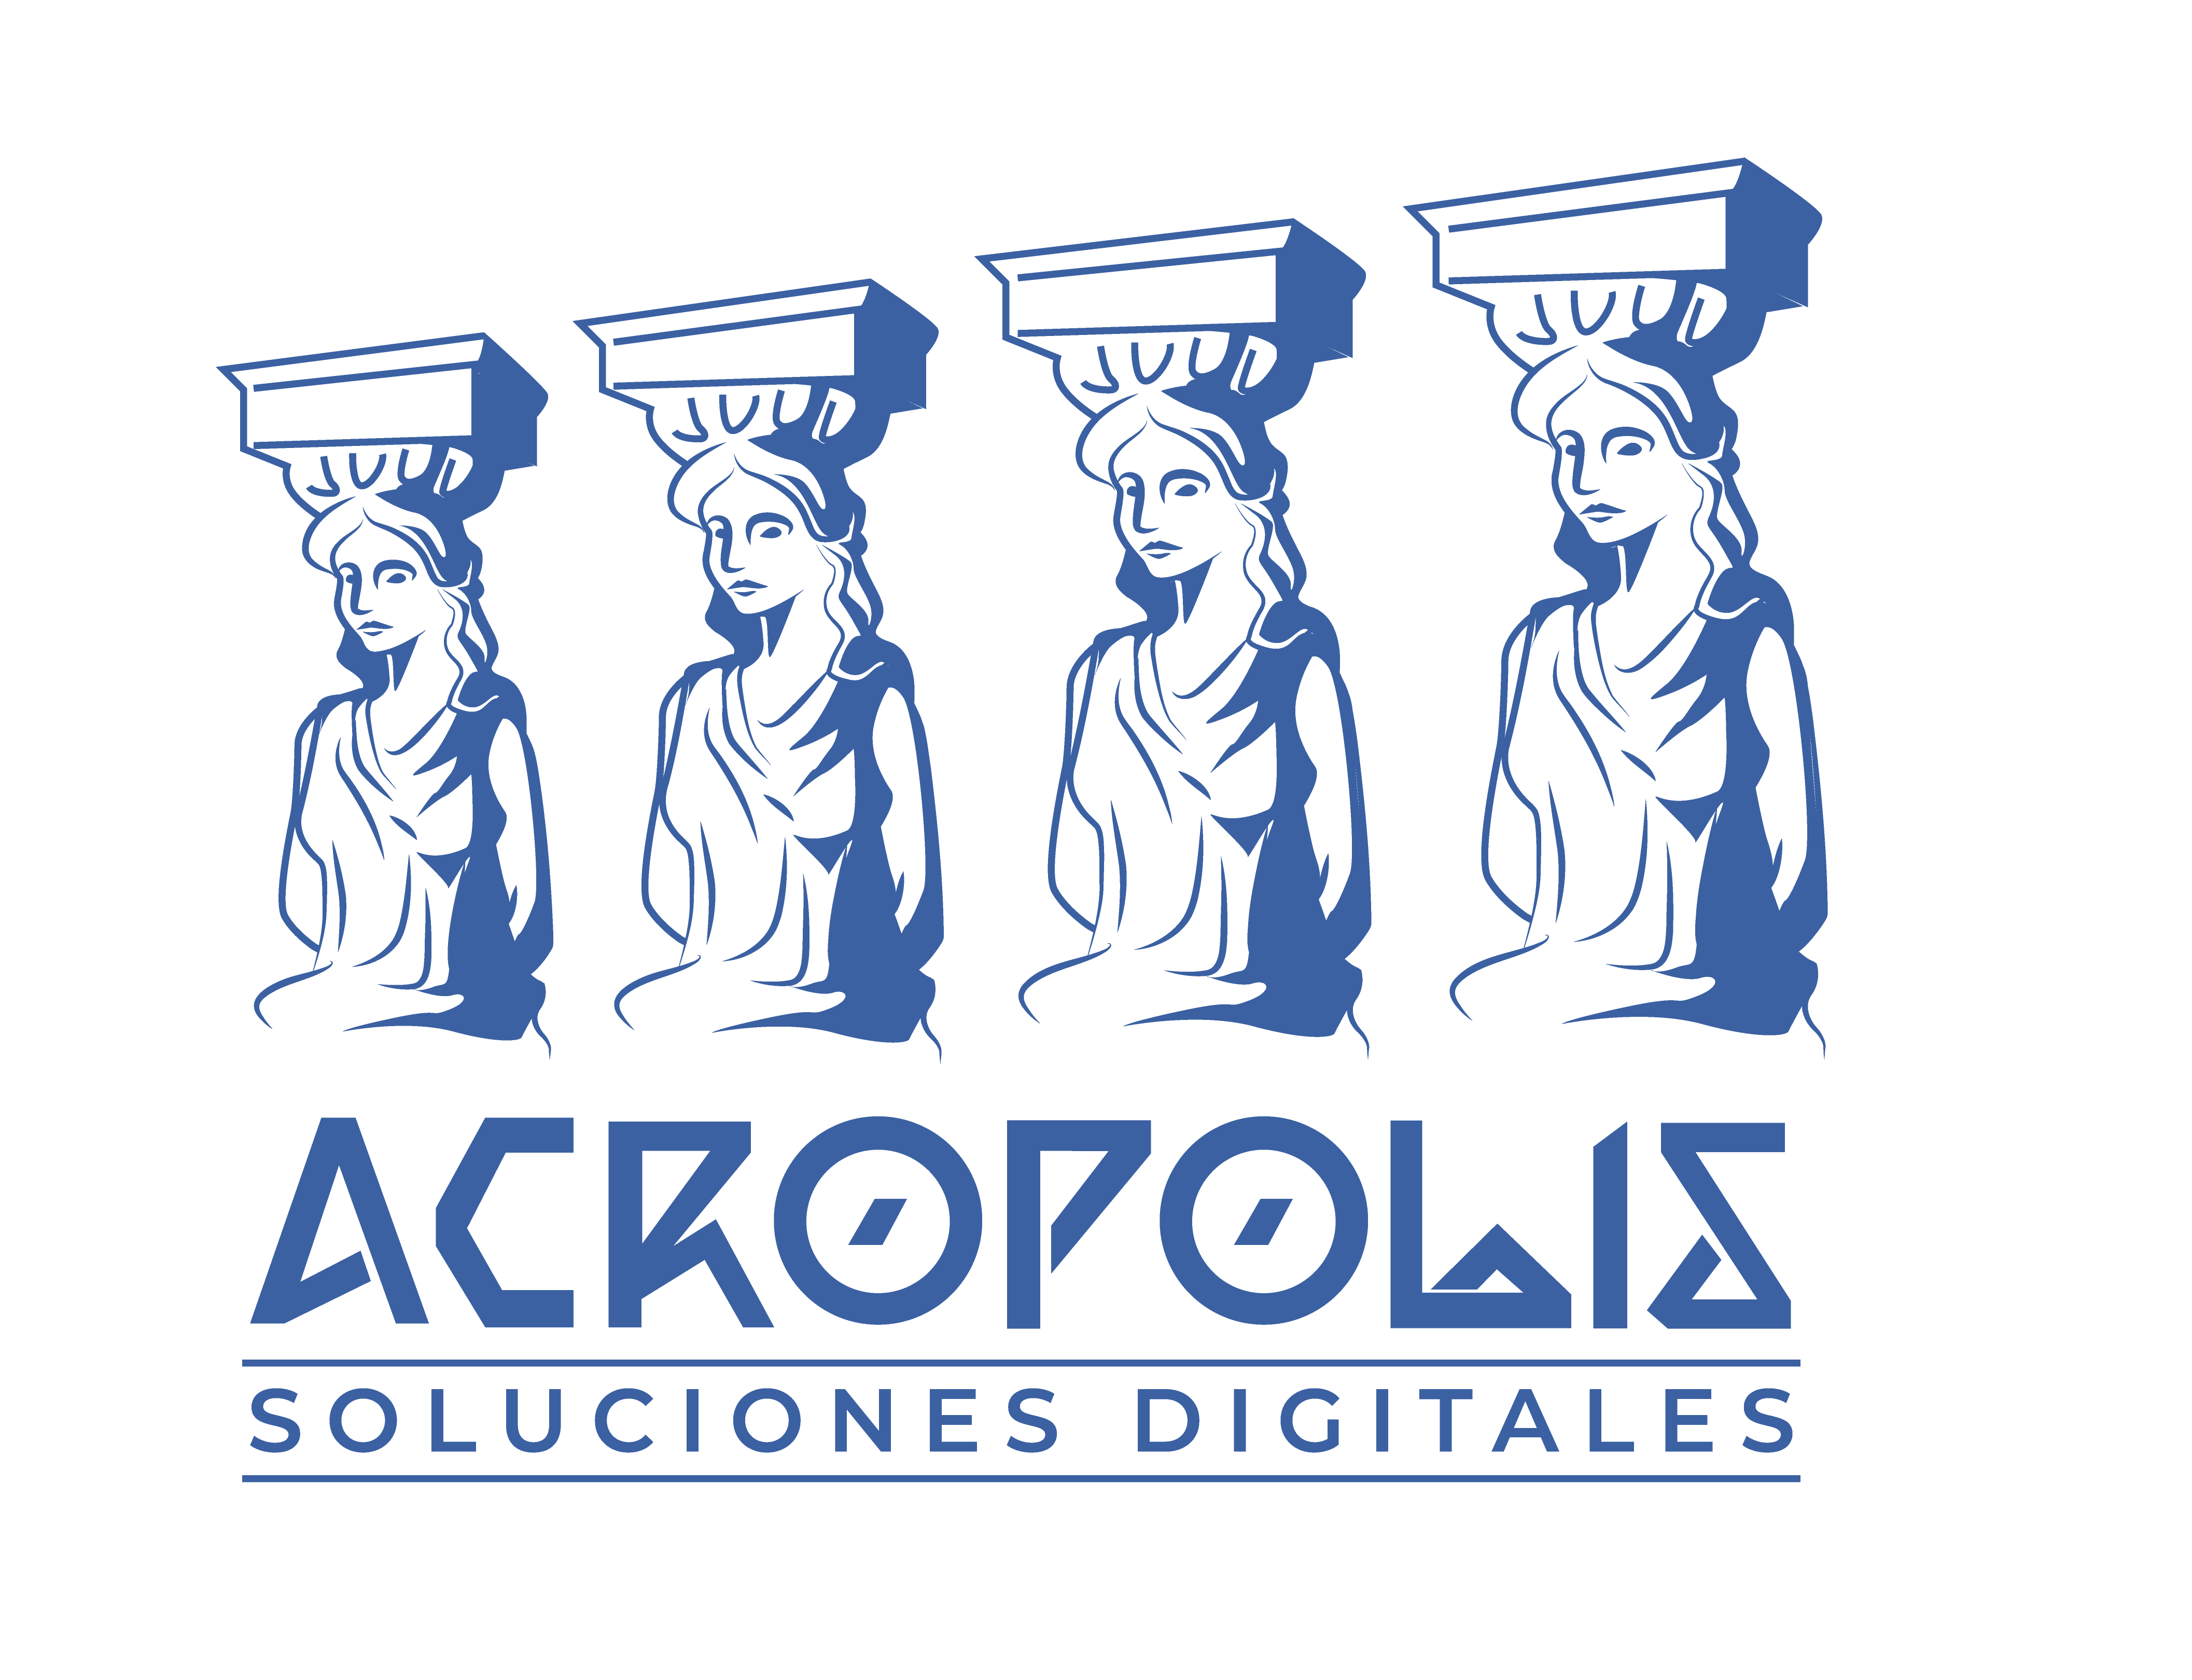 Acrópolis Soluciones Digitales